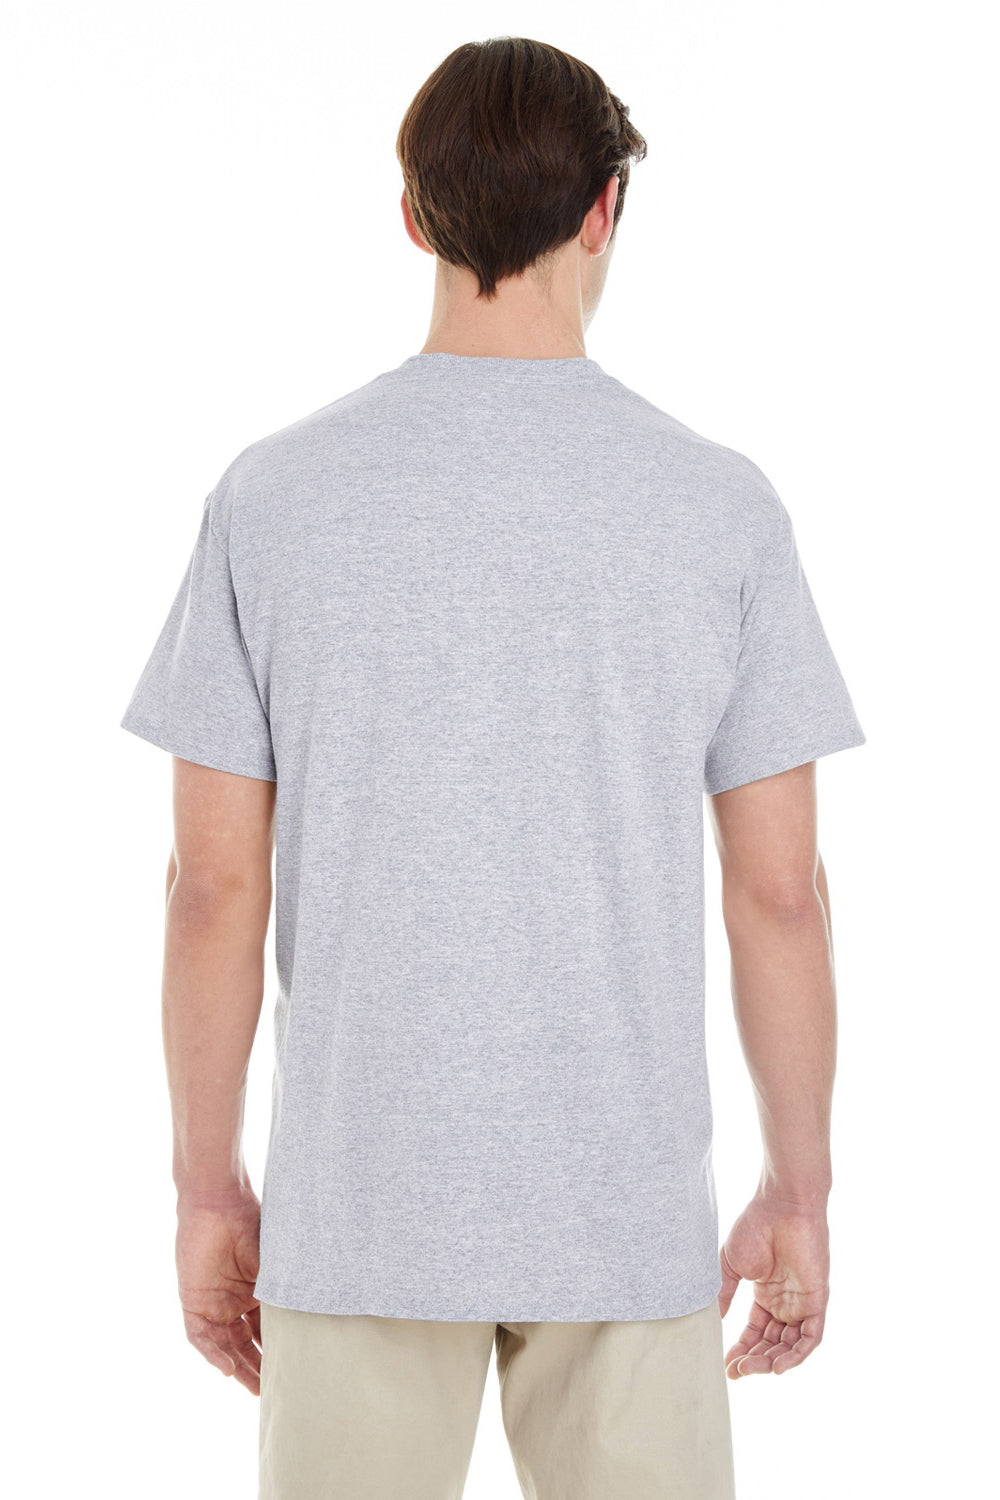 Gildan G530 Mens Short Sleeve Crewneck T-Shirt w/ Pocket Grey Back